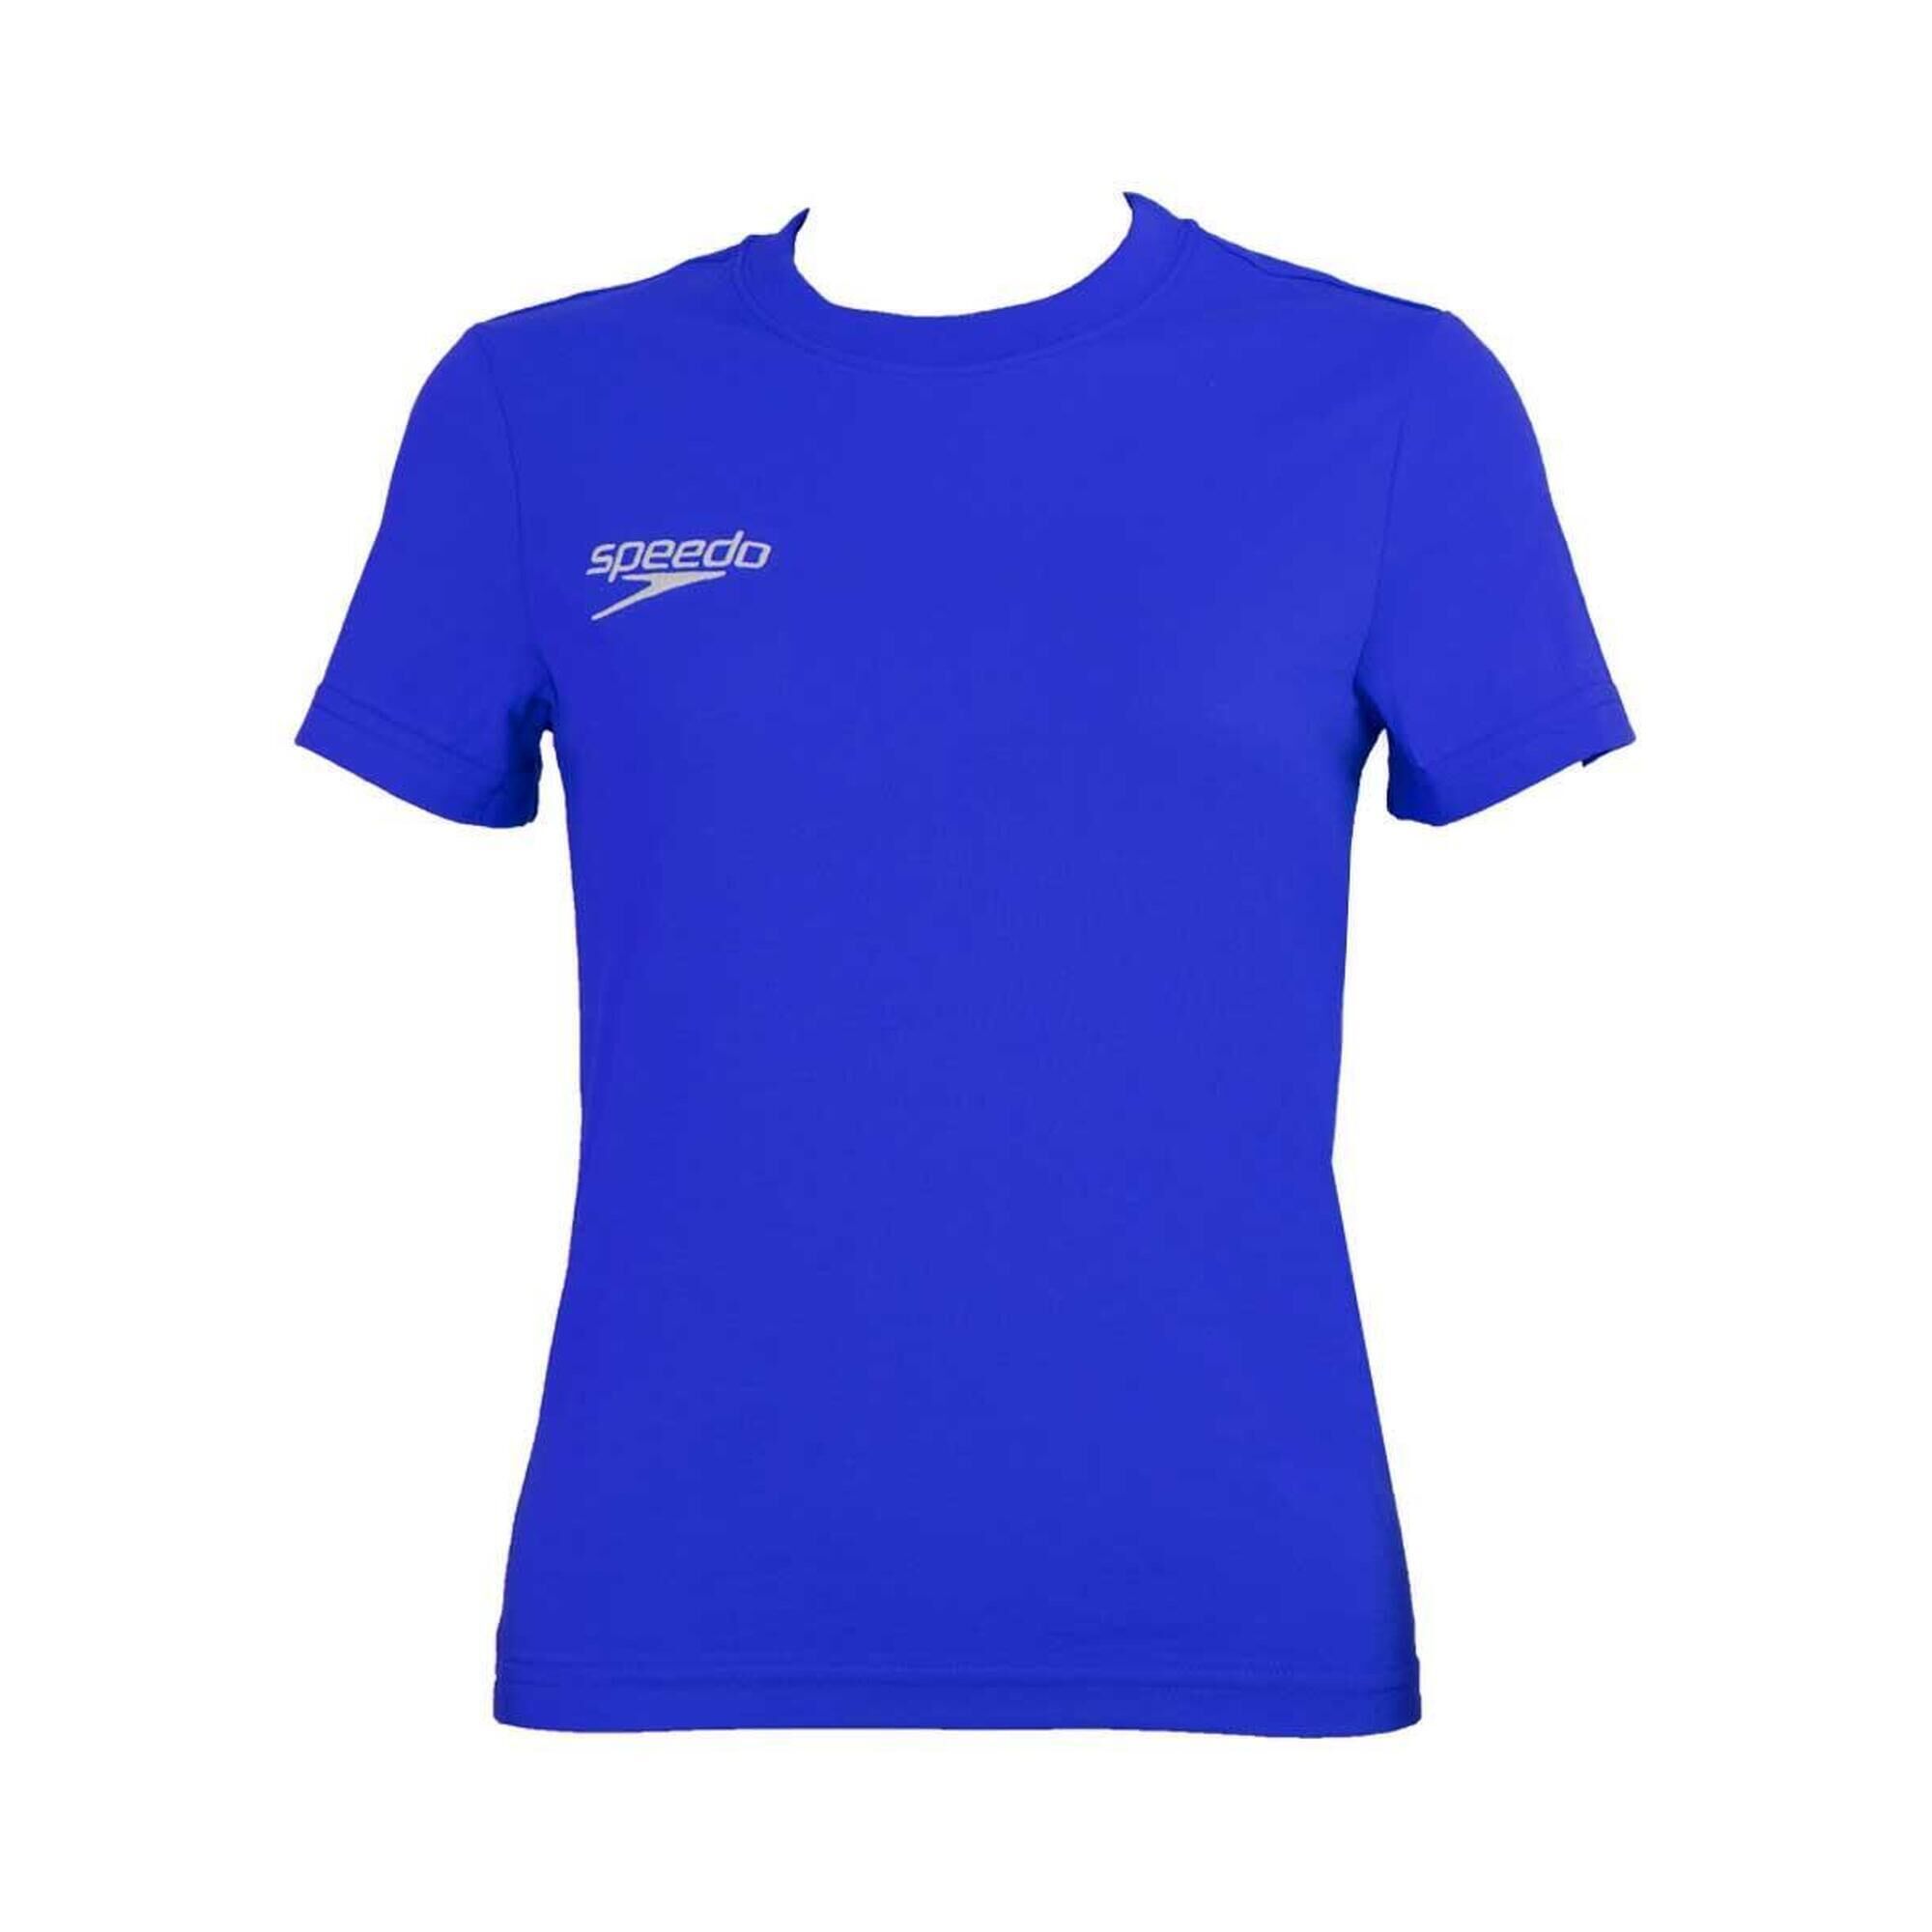 SPEEDO Speedo Team Kit Junior Small Logo T-Shirt - Blue - Blue